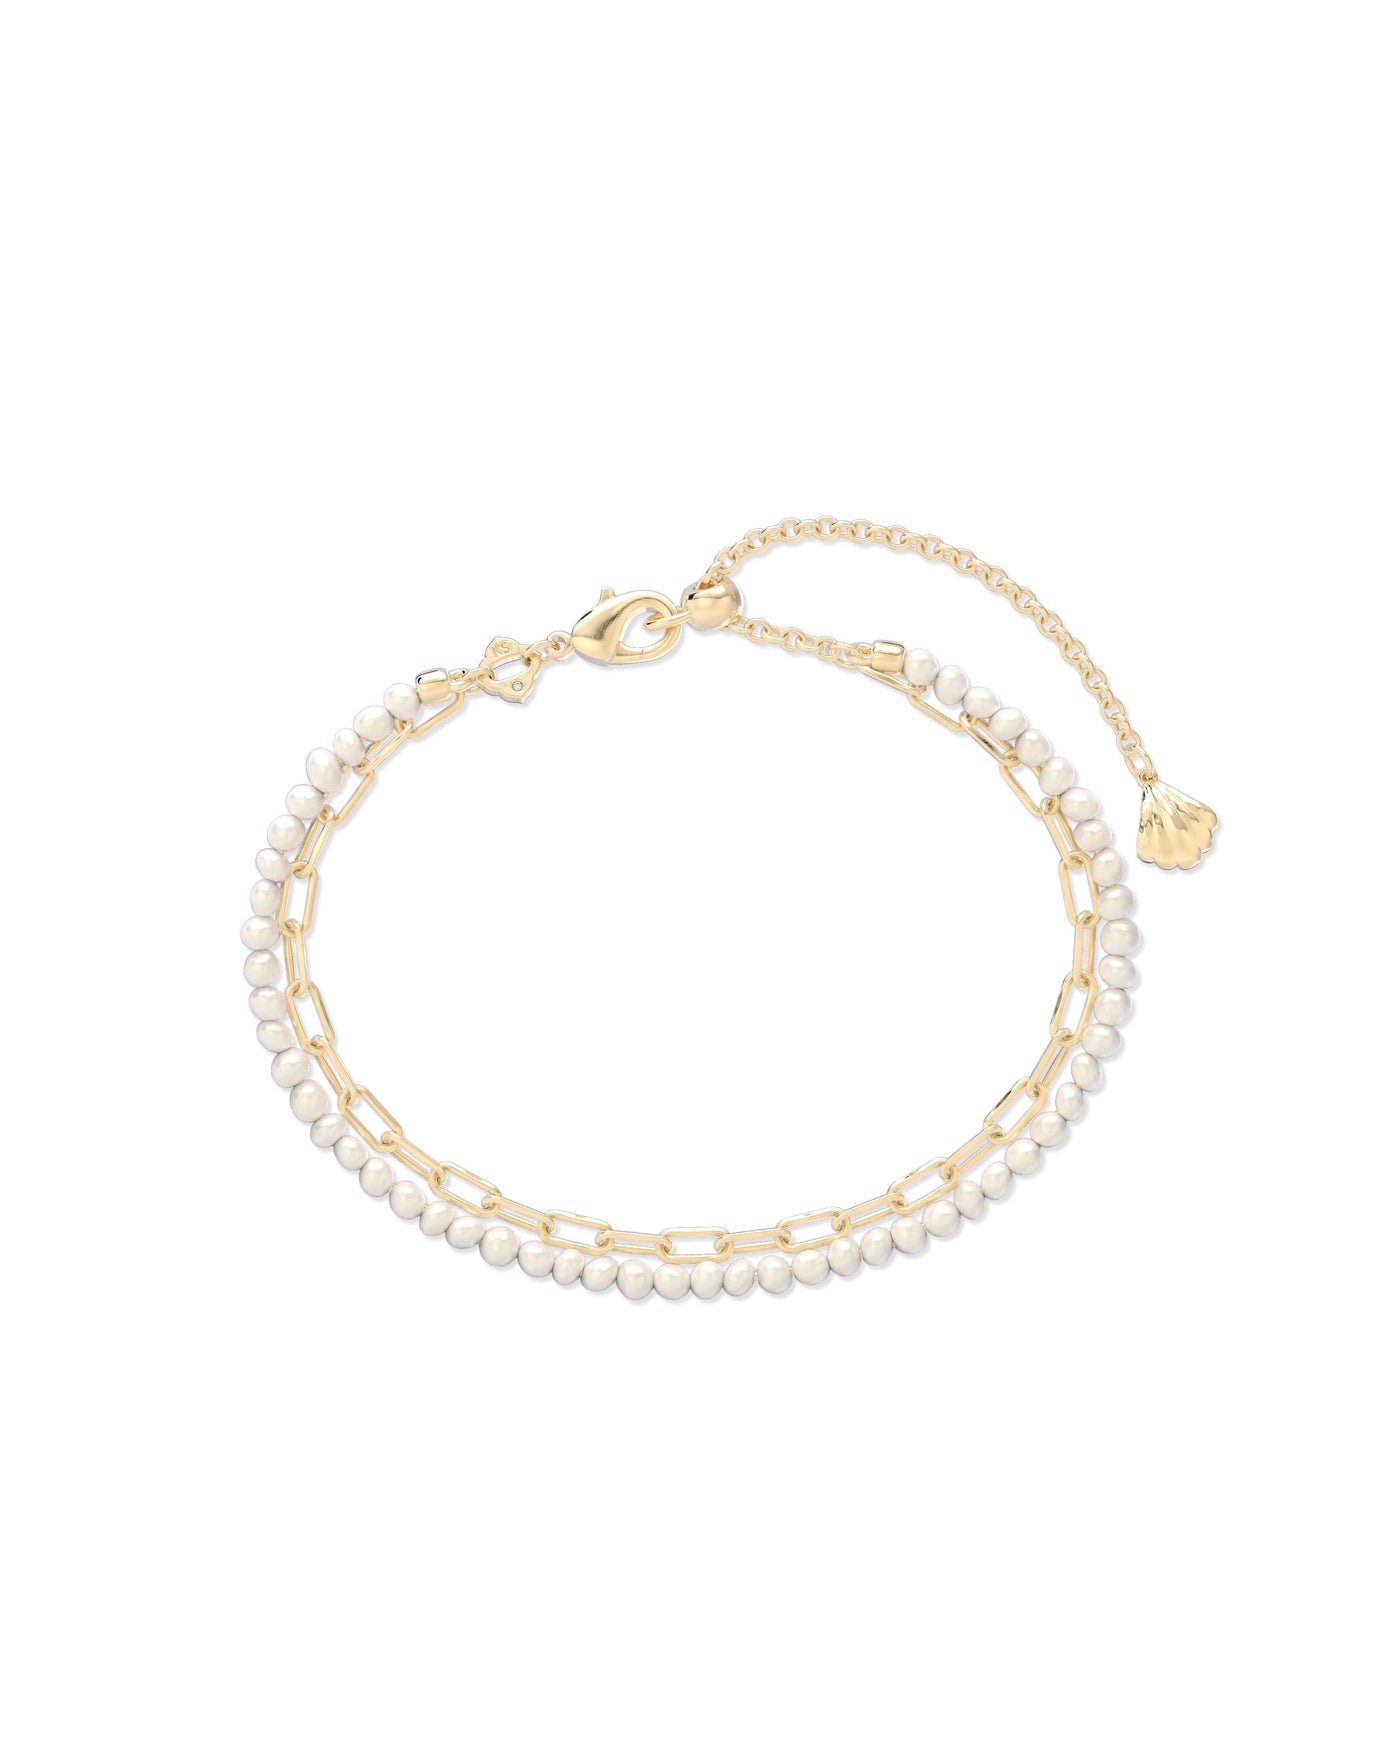 Kendra Scott Lolo Multi Strand Bracelet in Gold White Pearl on white background.